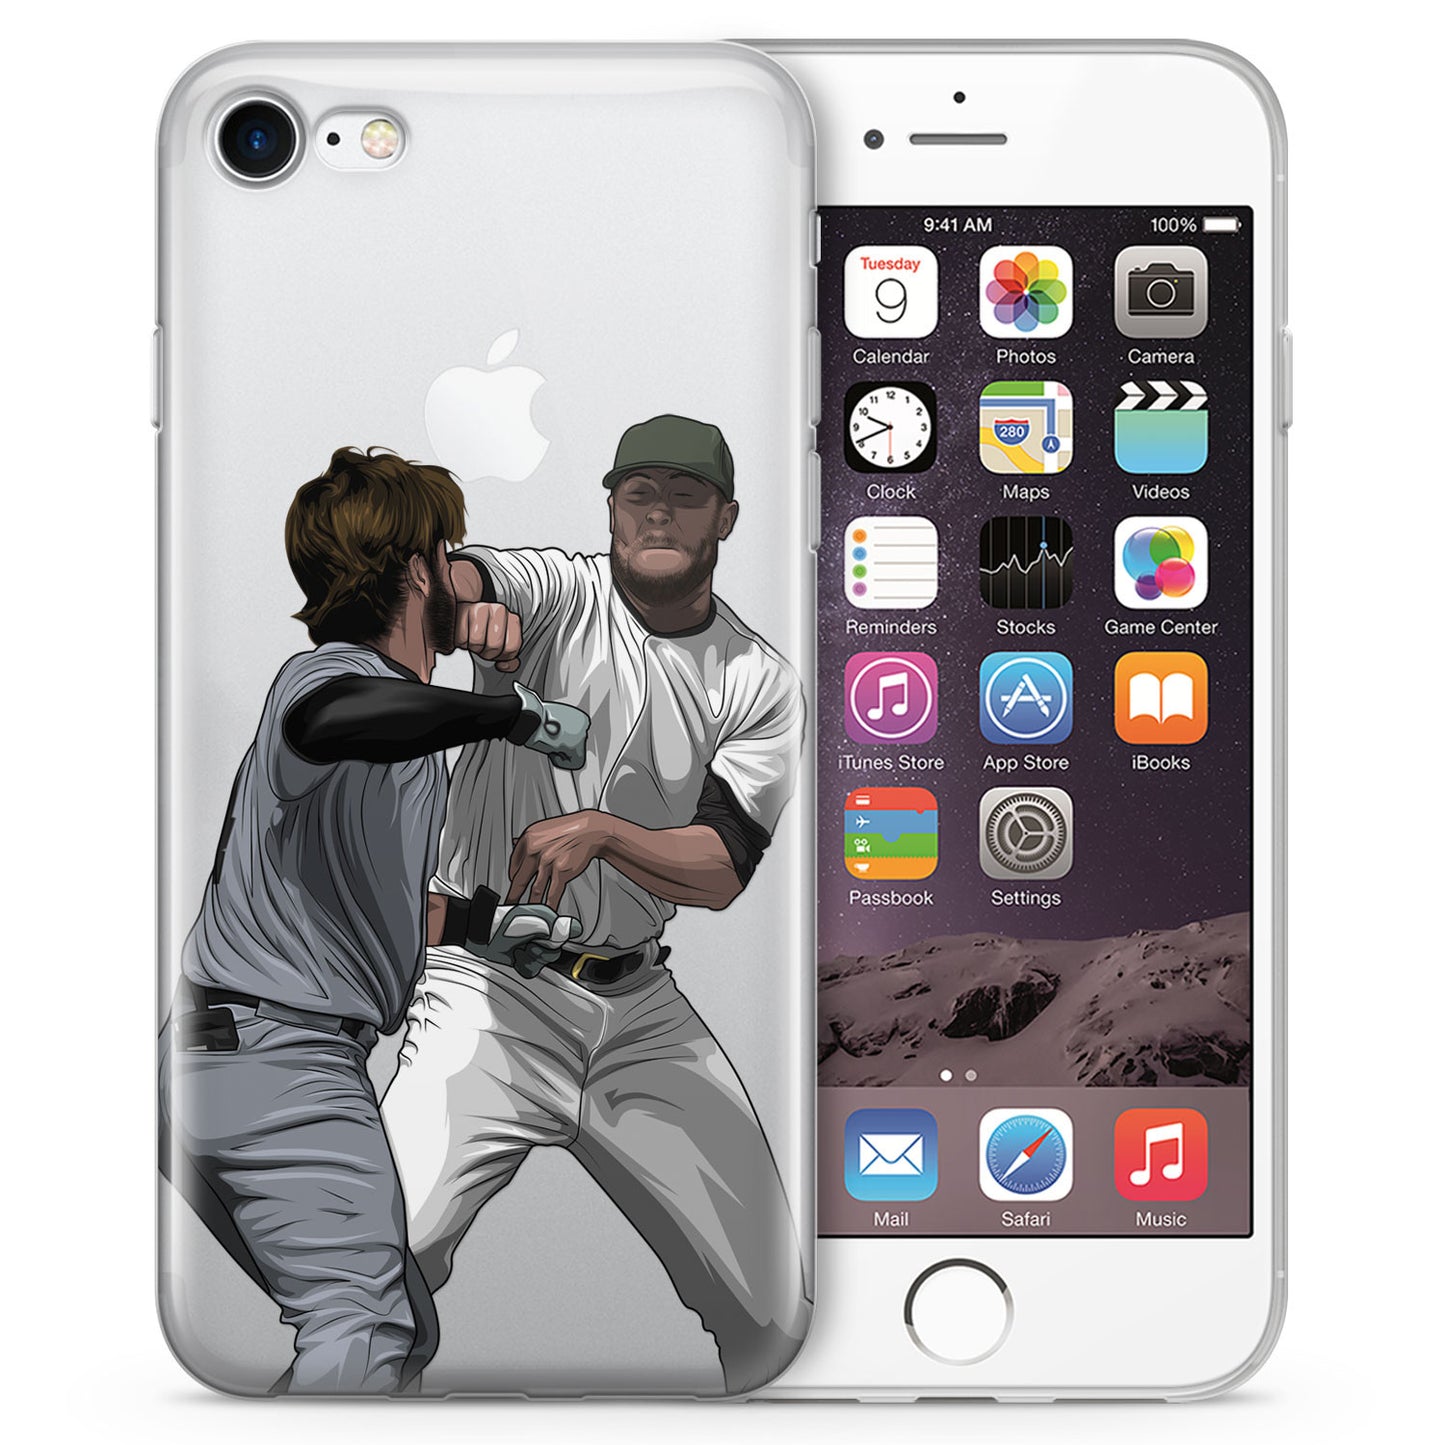 Drew Baseball iPhone Case